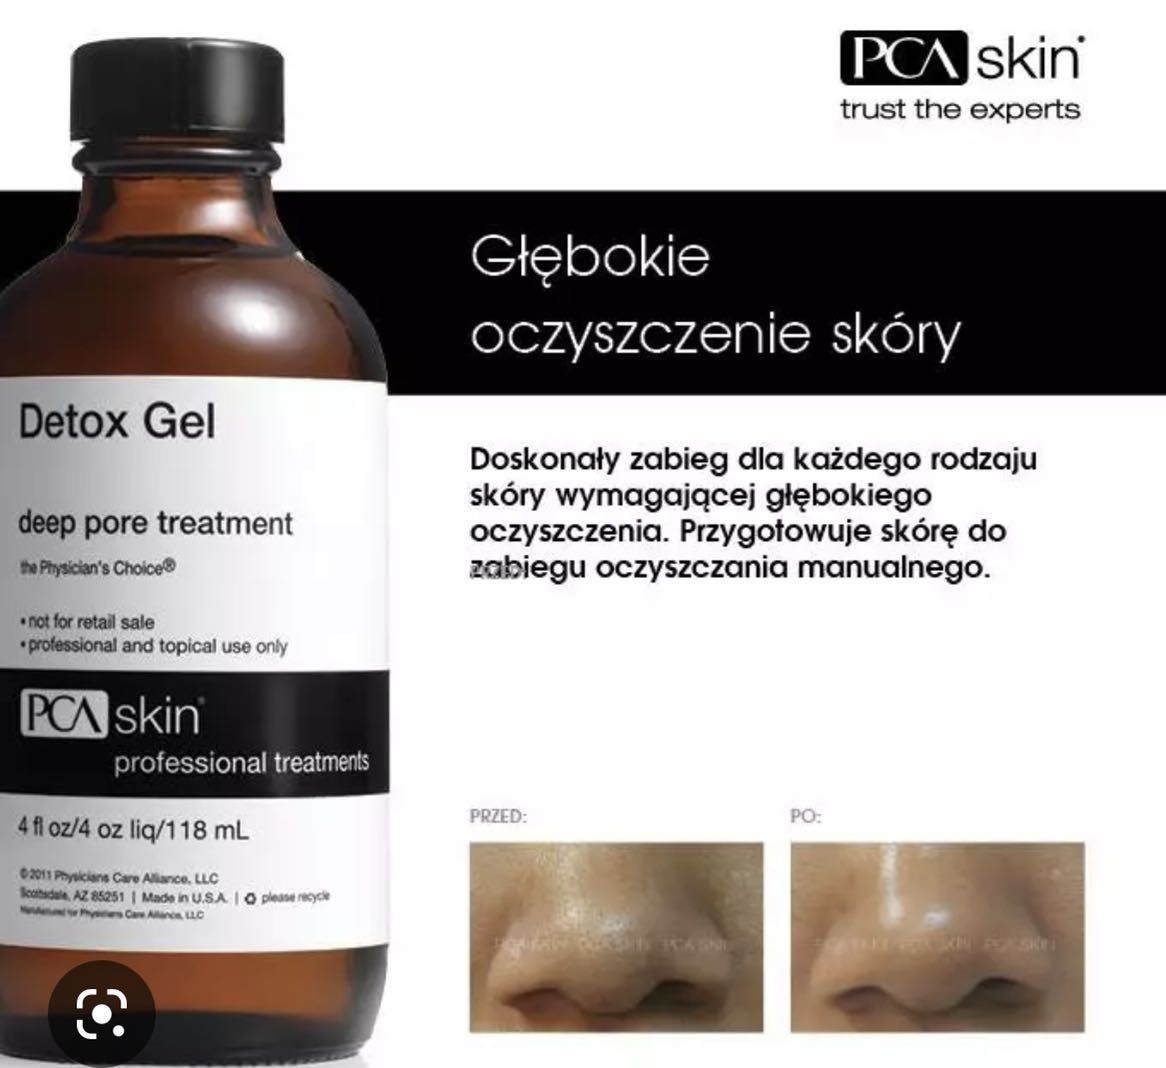 Portfolio usługi Pca Skin detox Gel.